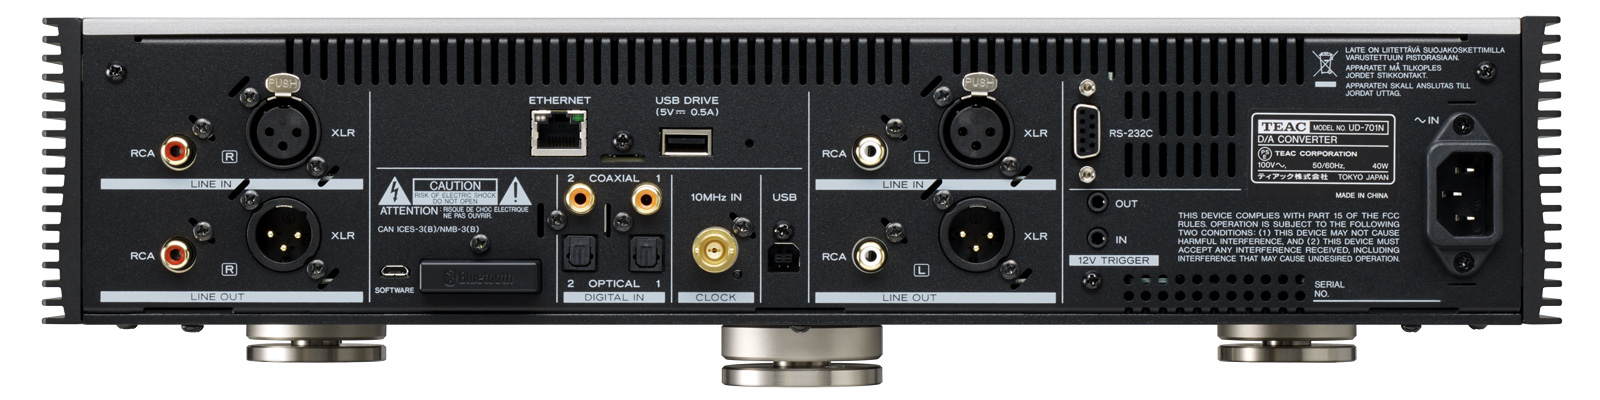 USB ЦАП/сетевой плеер Teac UD-701N silver